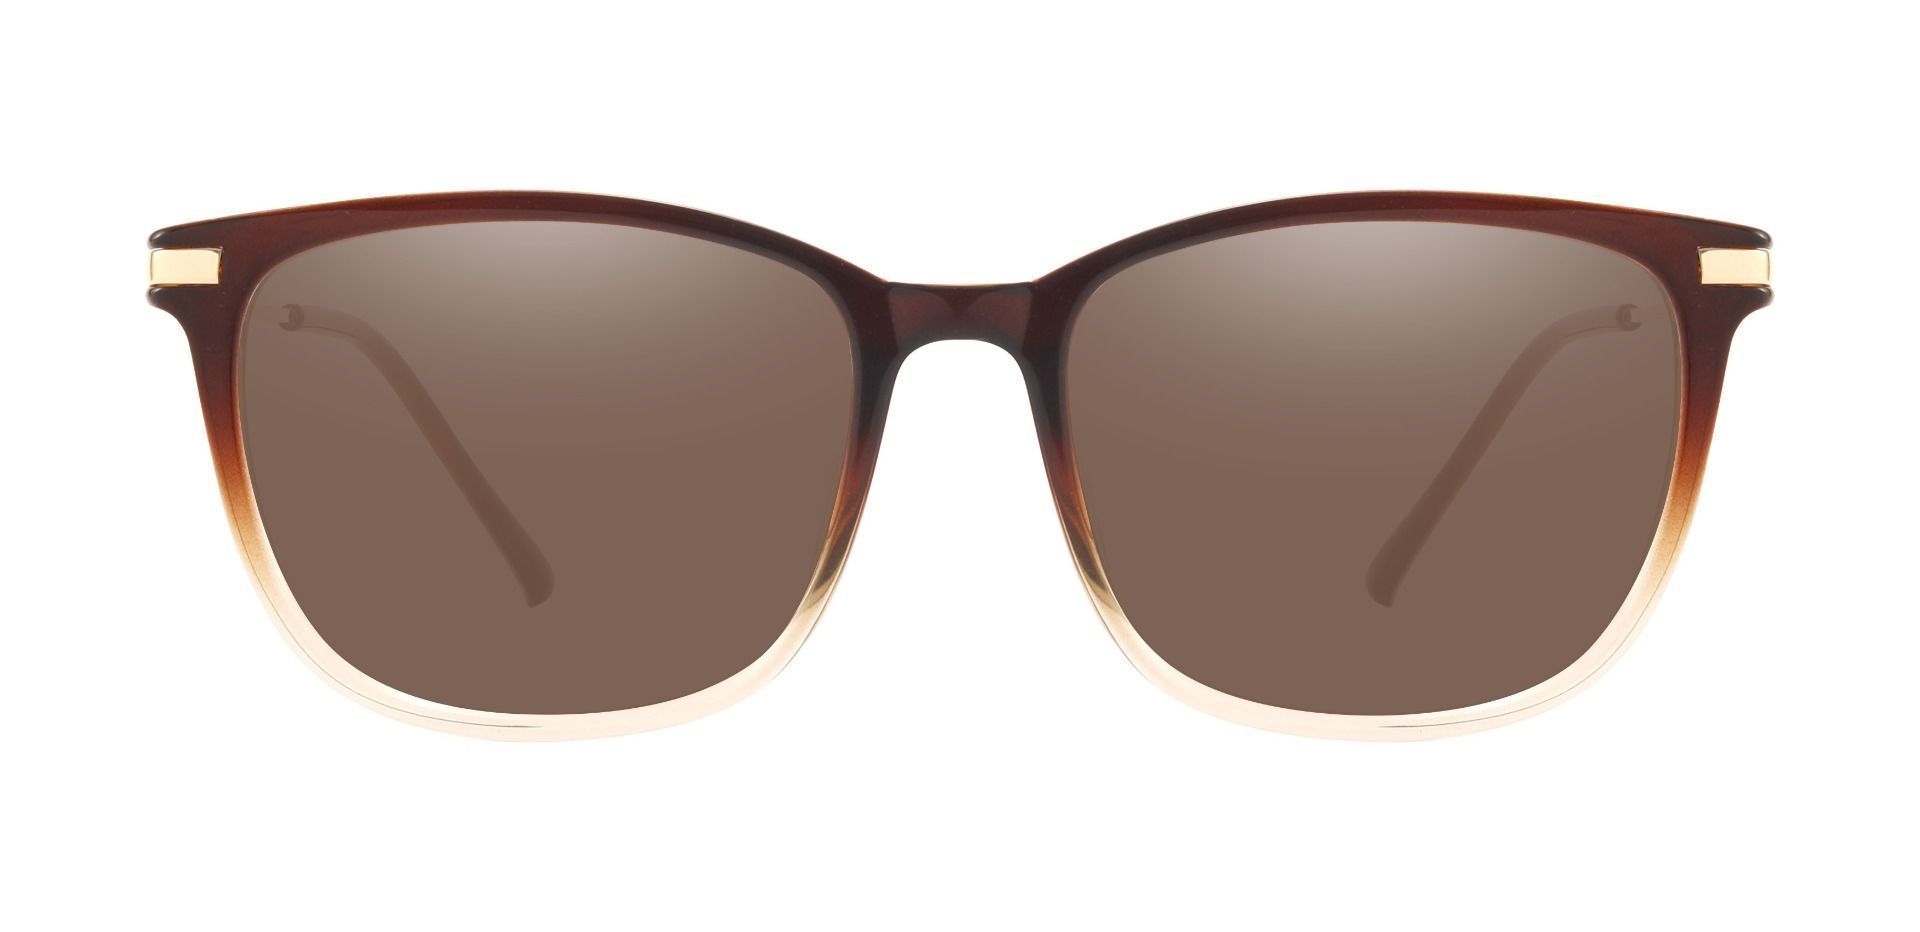 Katie square Prescription Sunglasses - Brown Frame With Brown Lenses